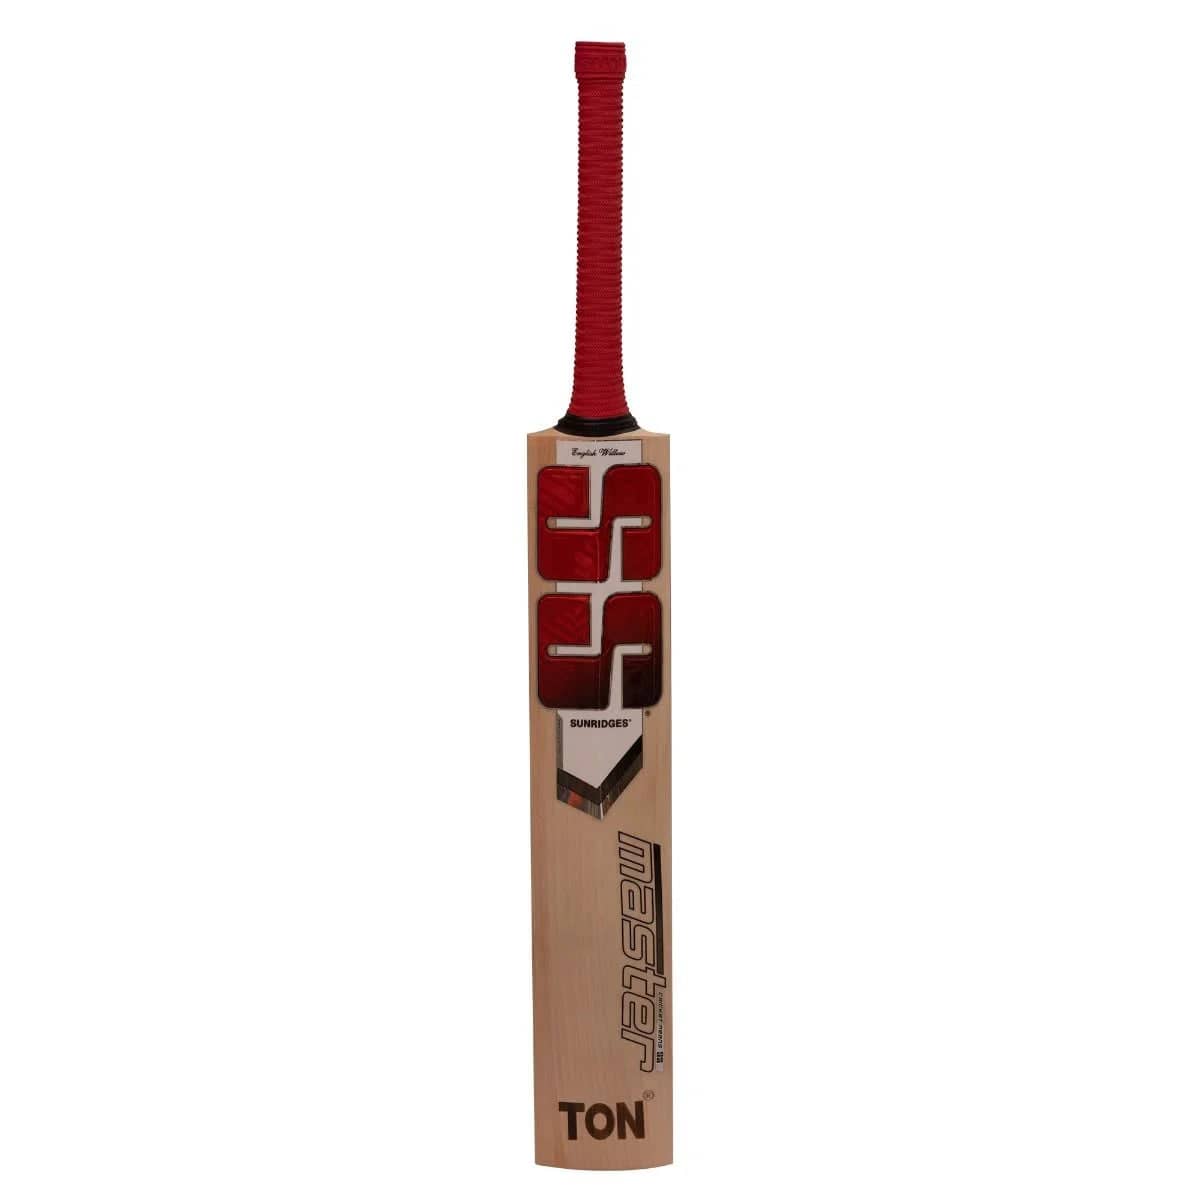 SS Cricket Bats Short Hand / Medium 2lbs 8oz - 2lbs 10oz SS Master 9000 English Willow Cricket Bat